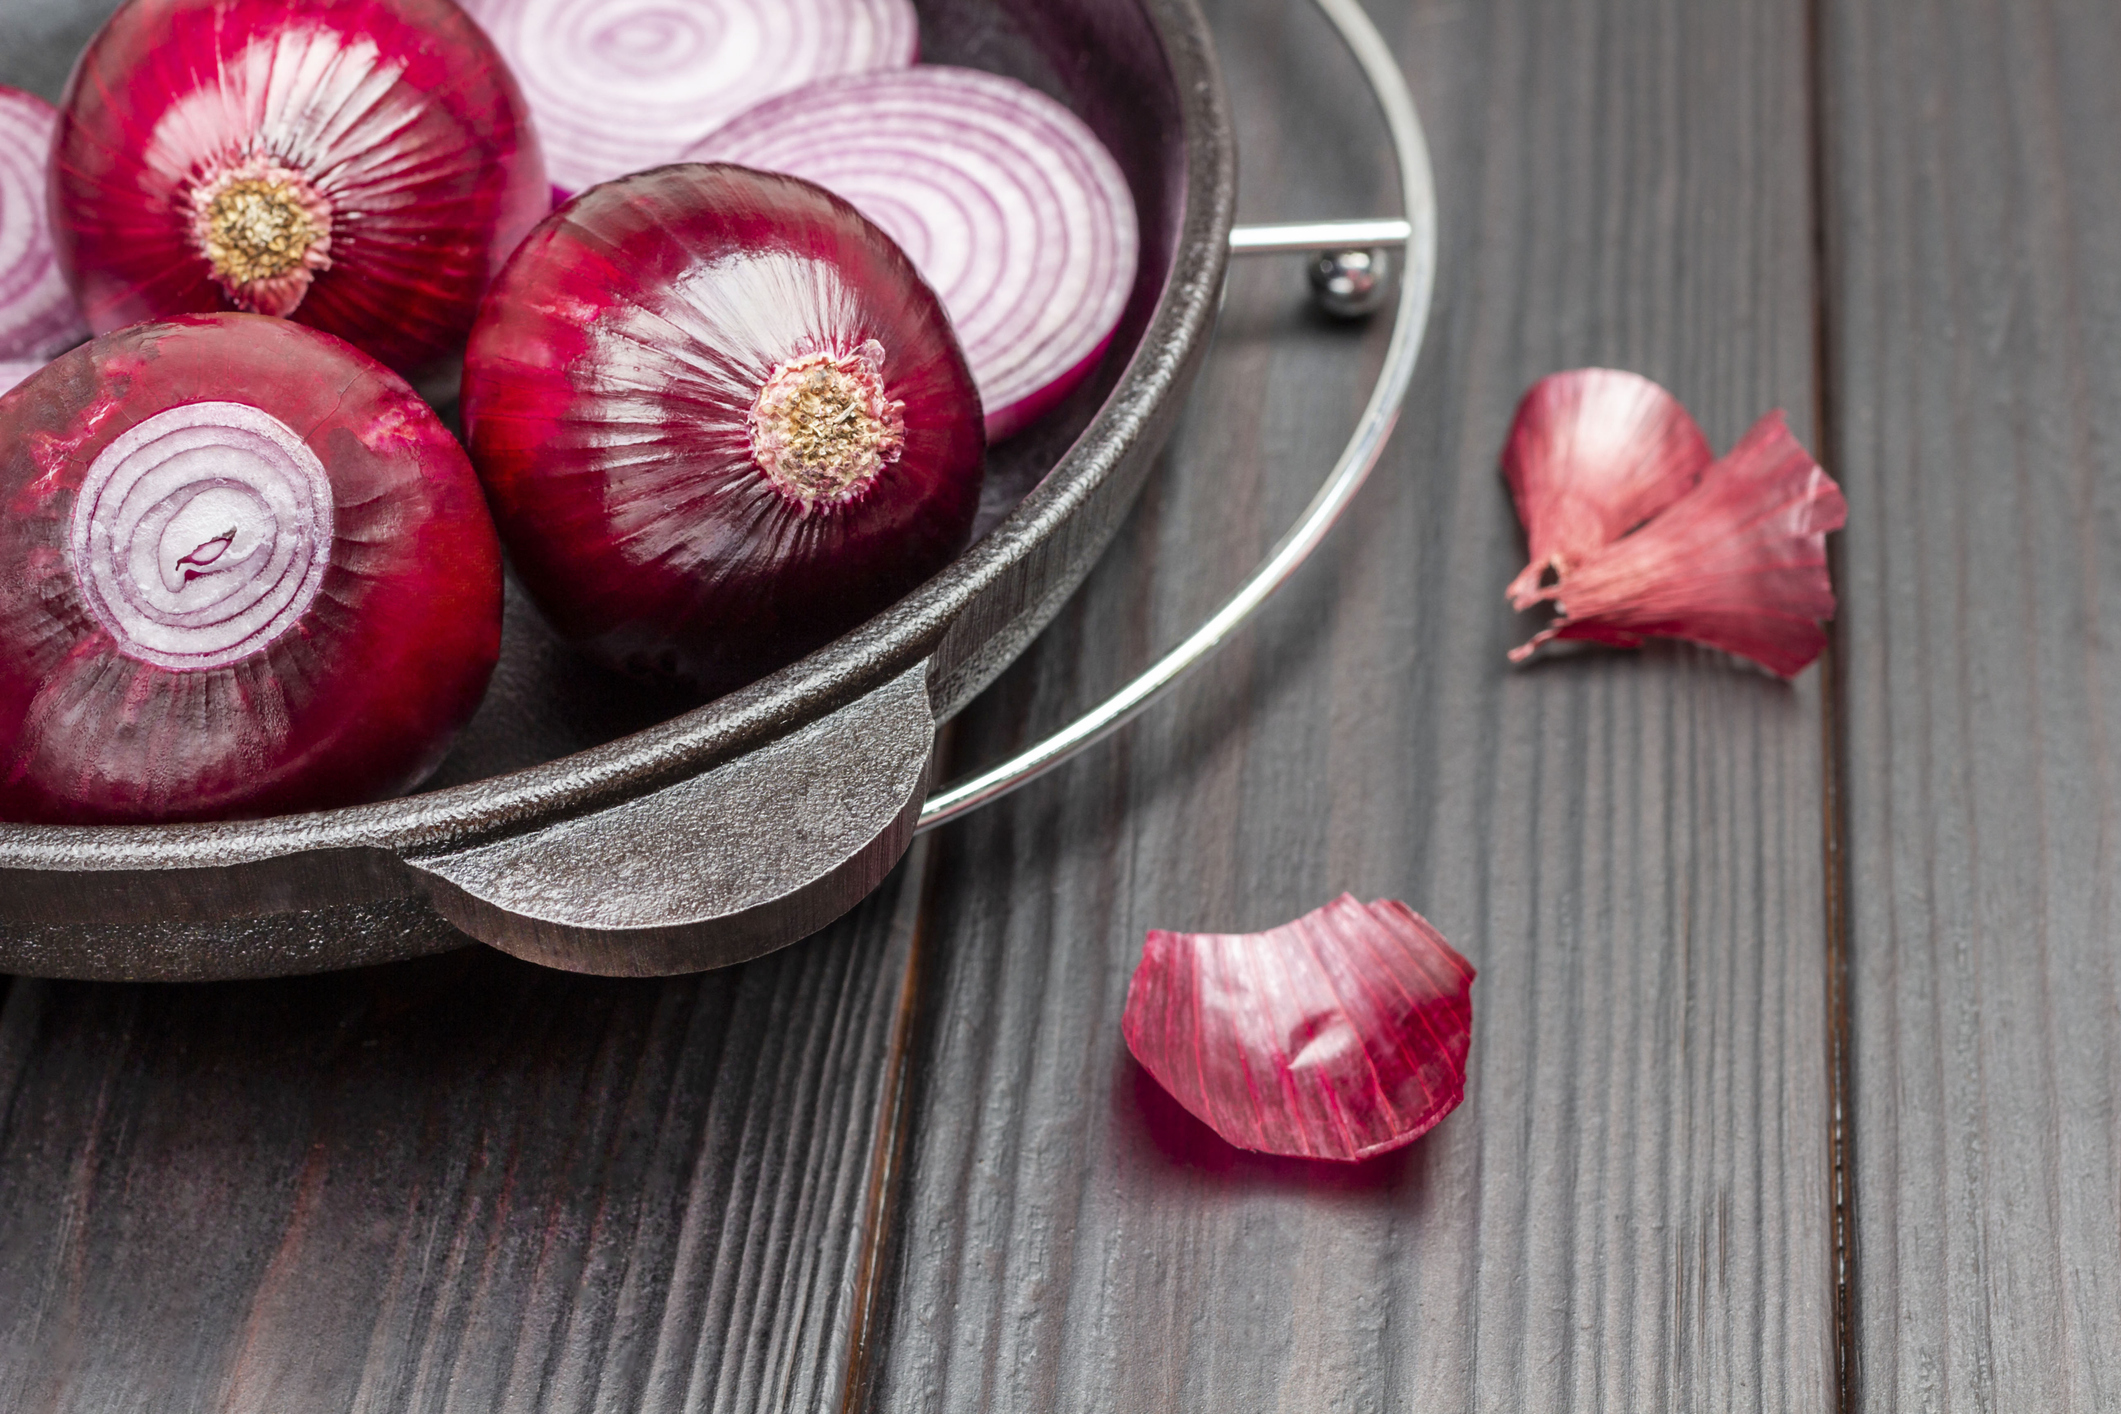 10 natural ways to make ‘onion breath’ go away